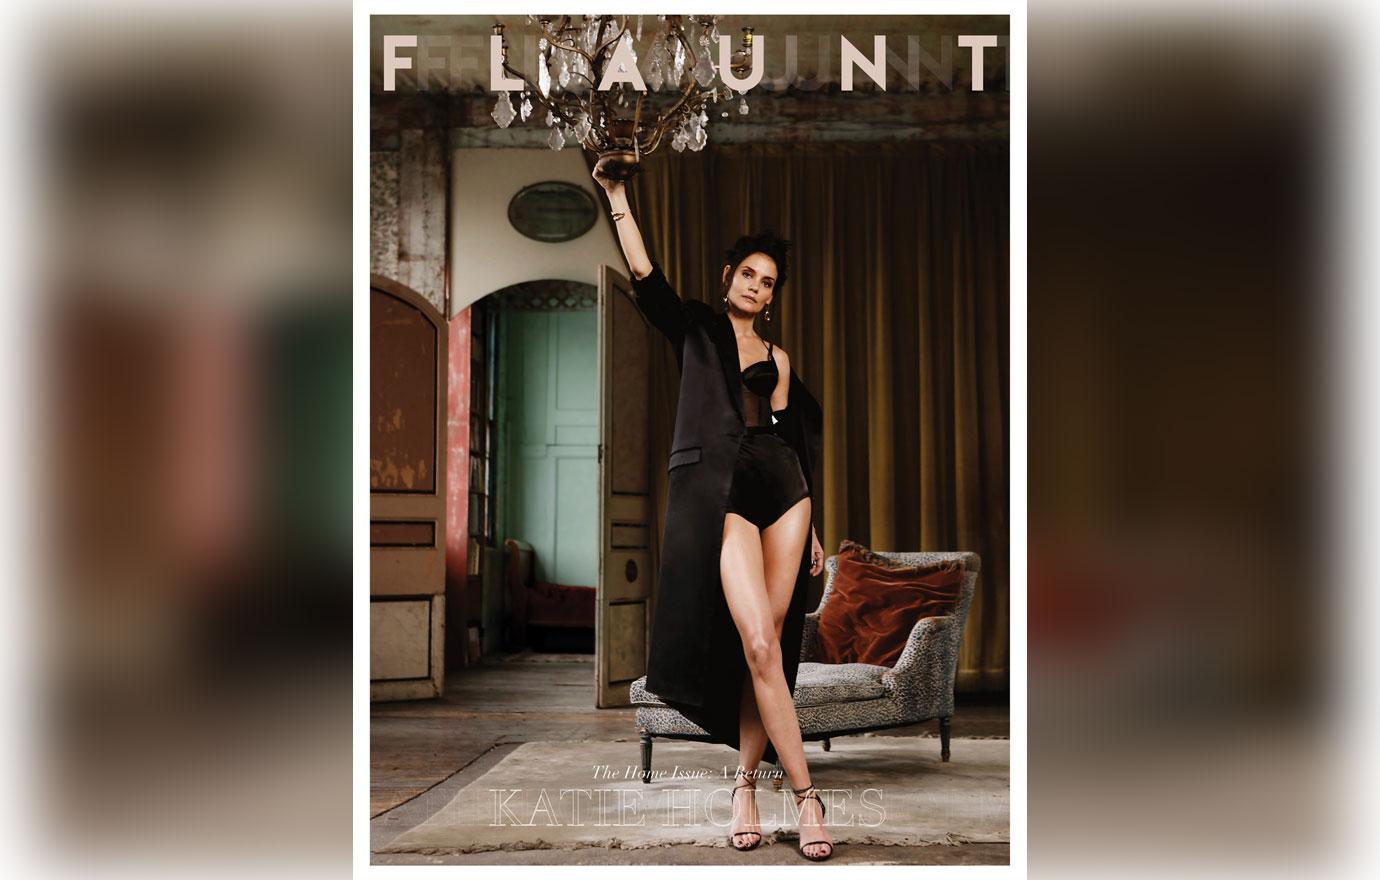 Katie Holmes Wears Lingerie For Flaunt Magazine Spread 